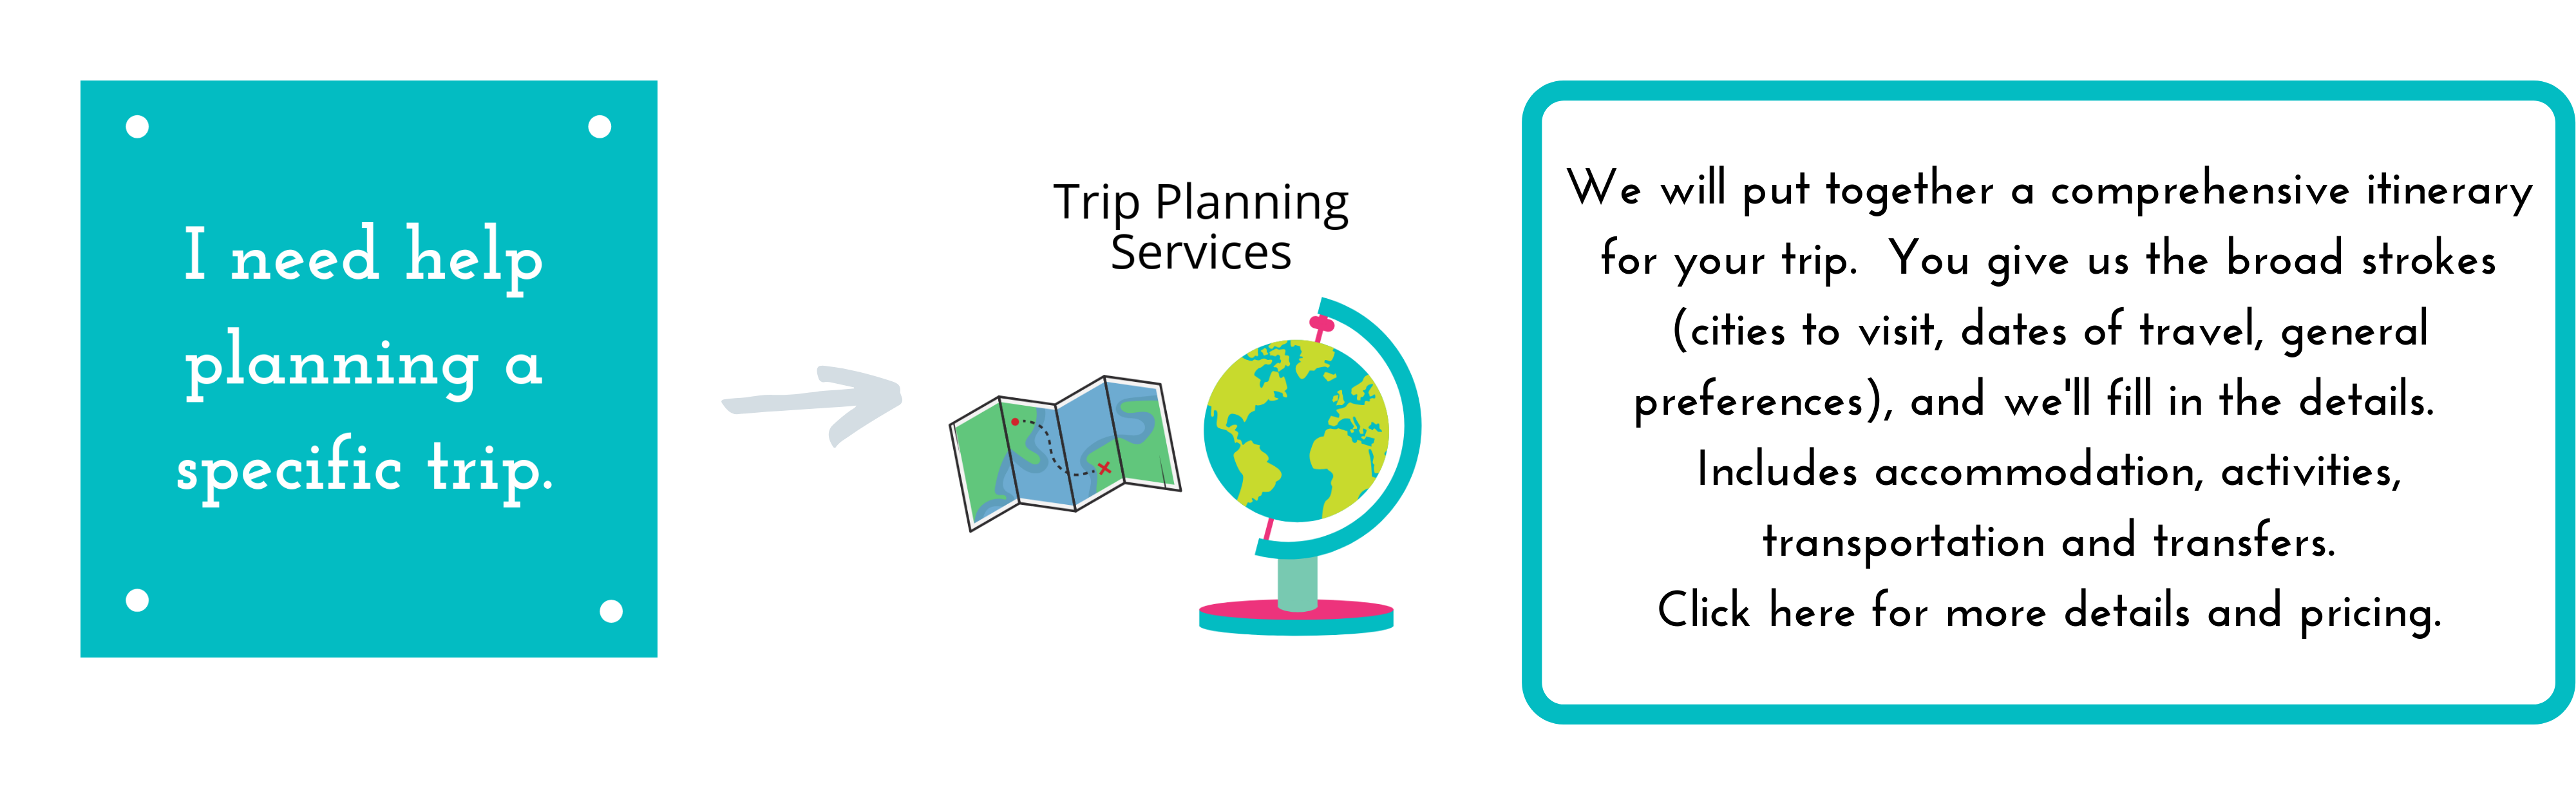 Trip Planning Services